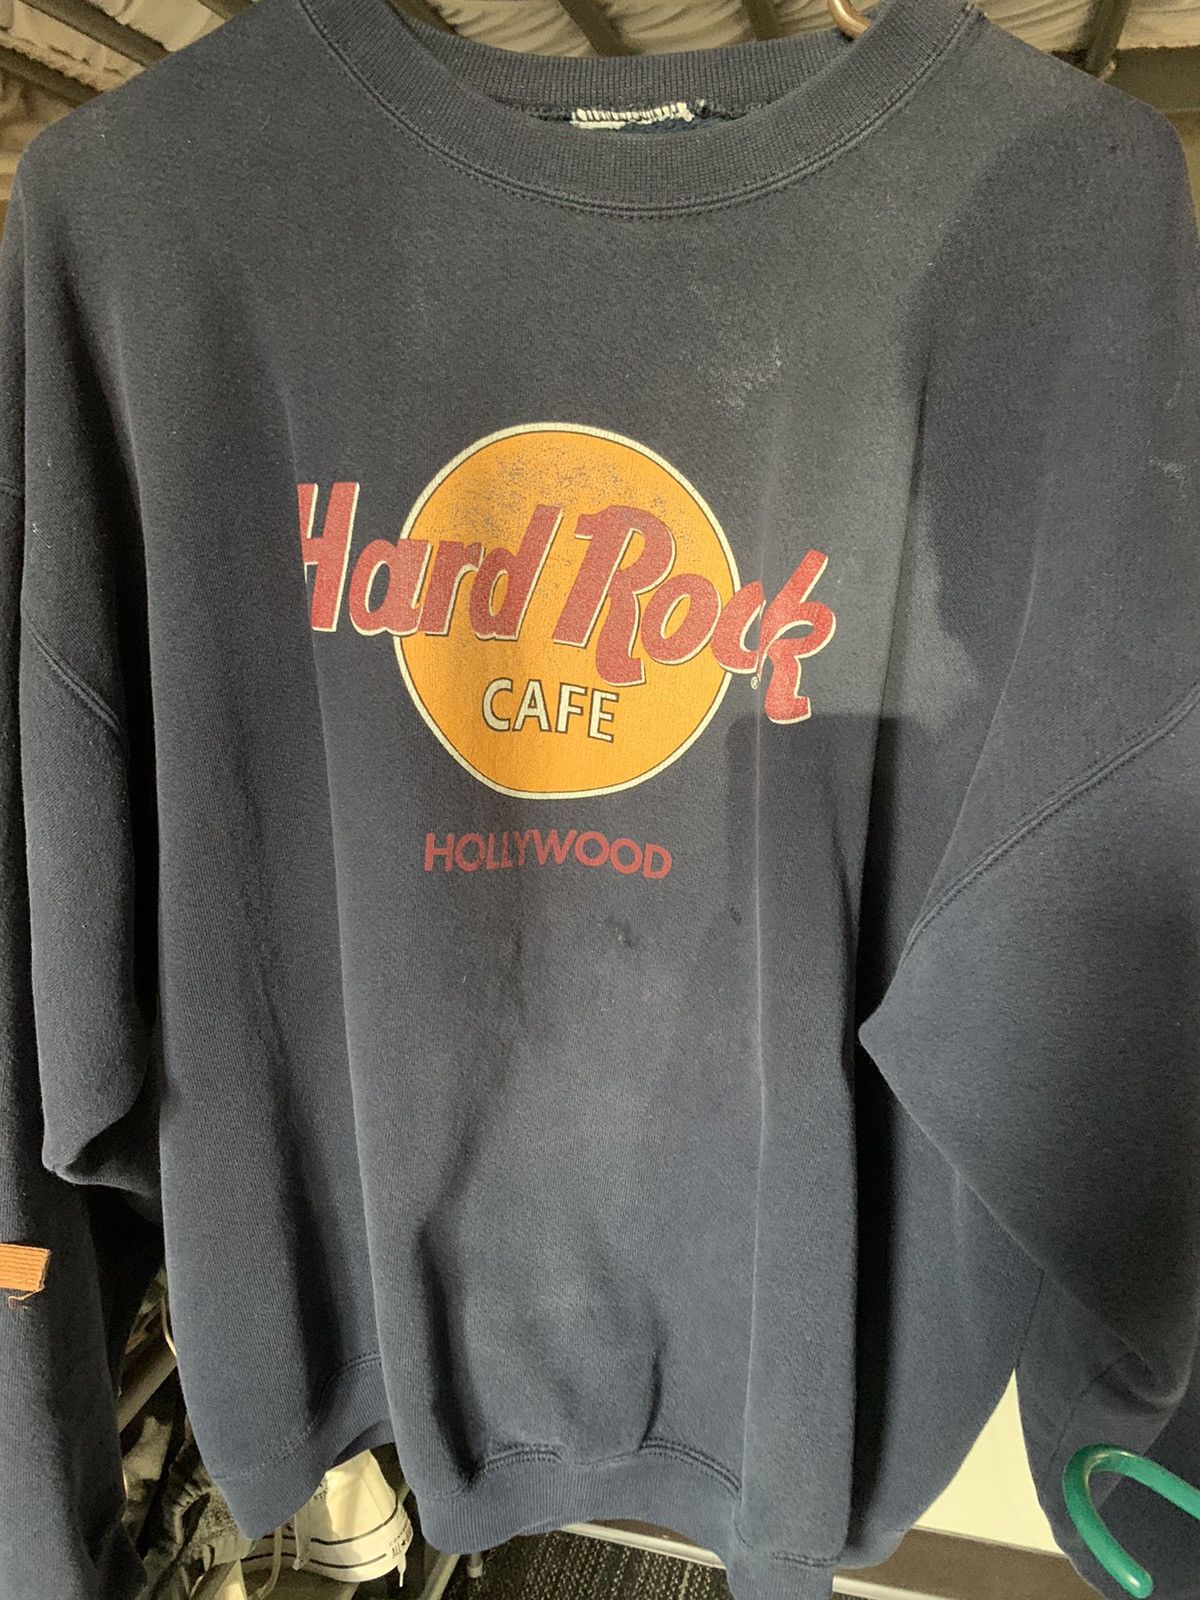 Hard Rock Cafe Hard Rock Cafe Hollywood Sweatshirt Size M / US 6-8 / IT 42-44 - 1 Preview